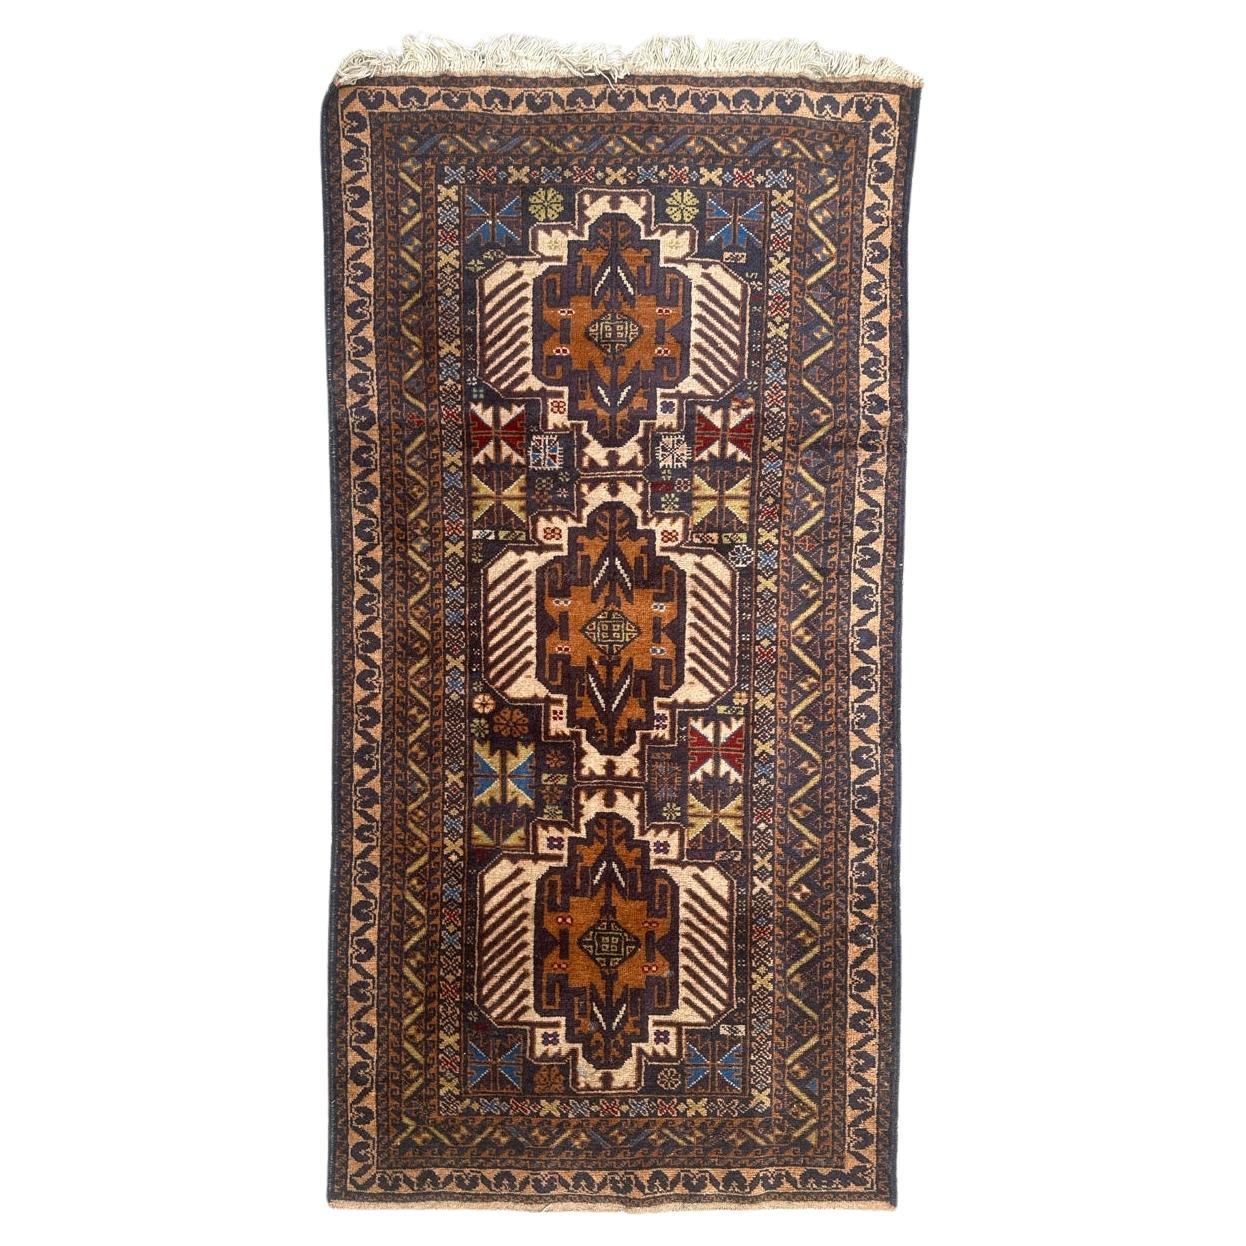 Le joli tapis turkmène Baluch vintage de Bobyrug 